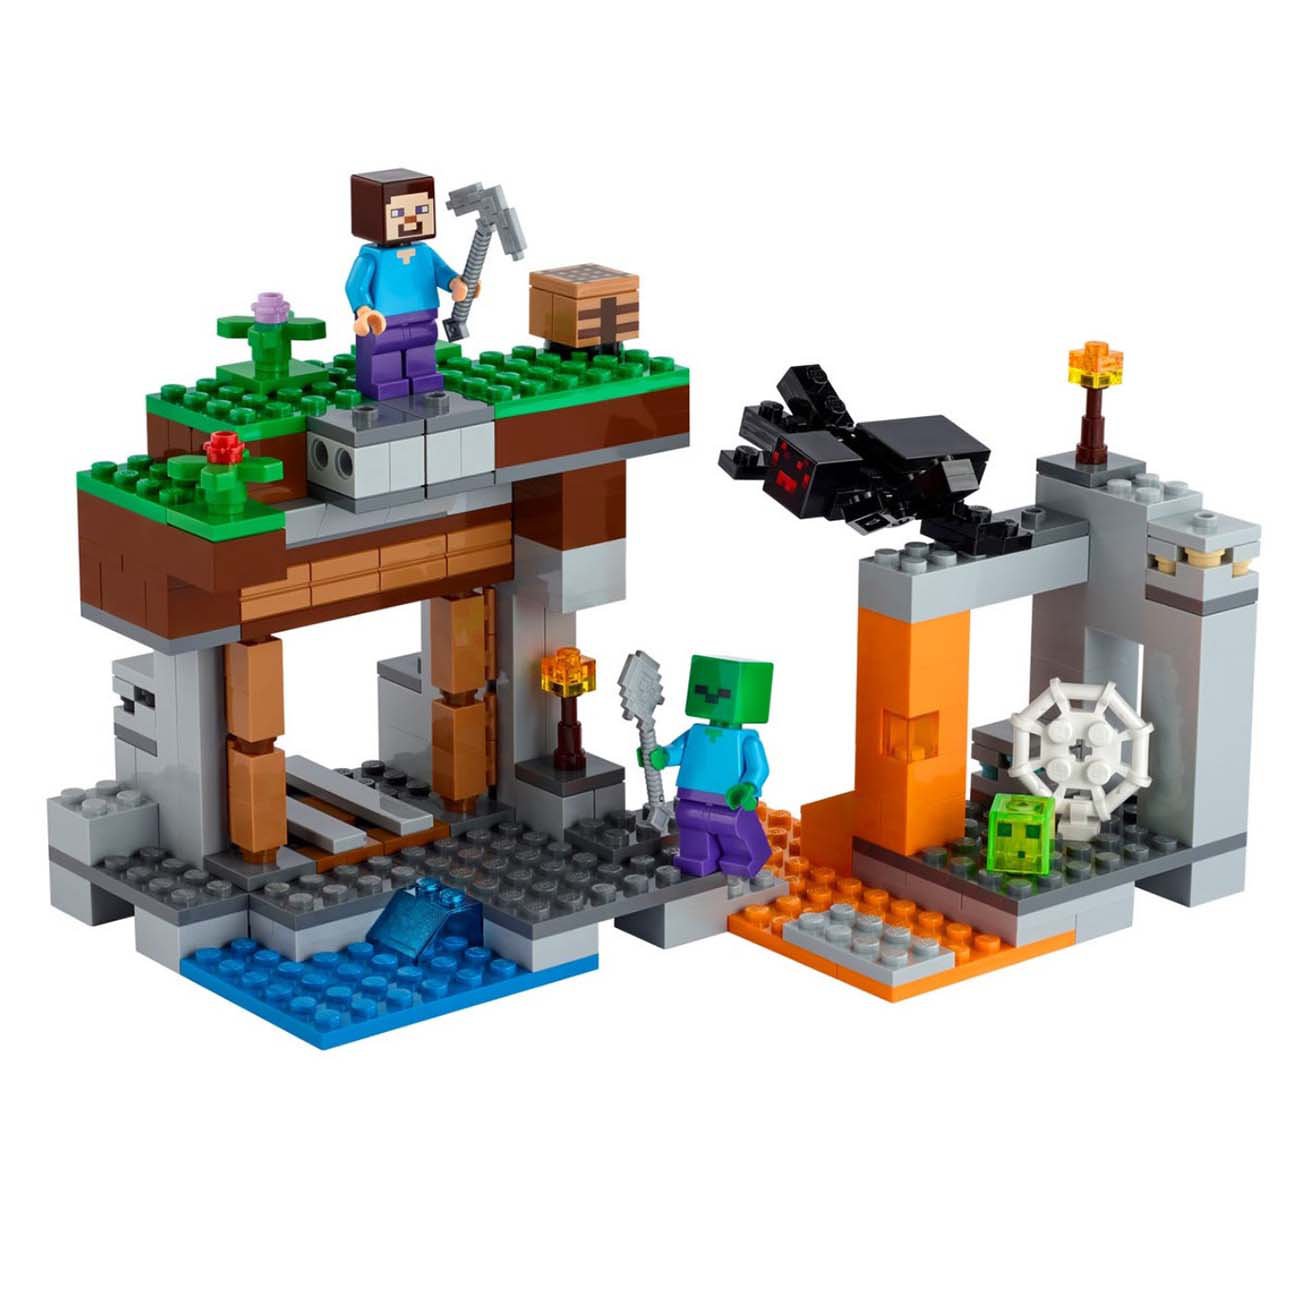 The "Abandoned" Mine Playset - Shop Lego & Building Blocks at H-E-B